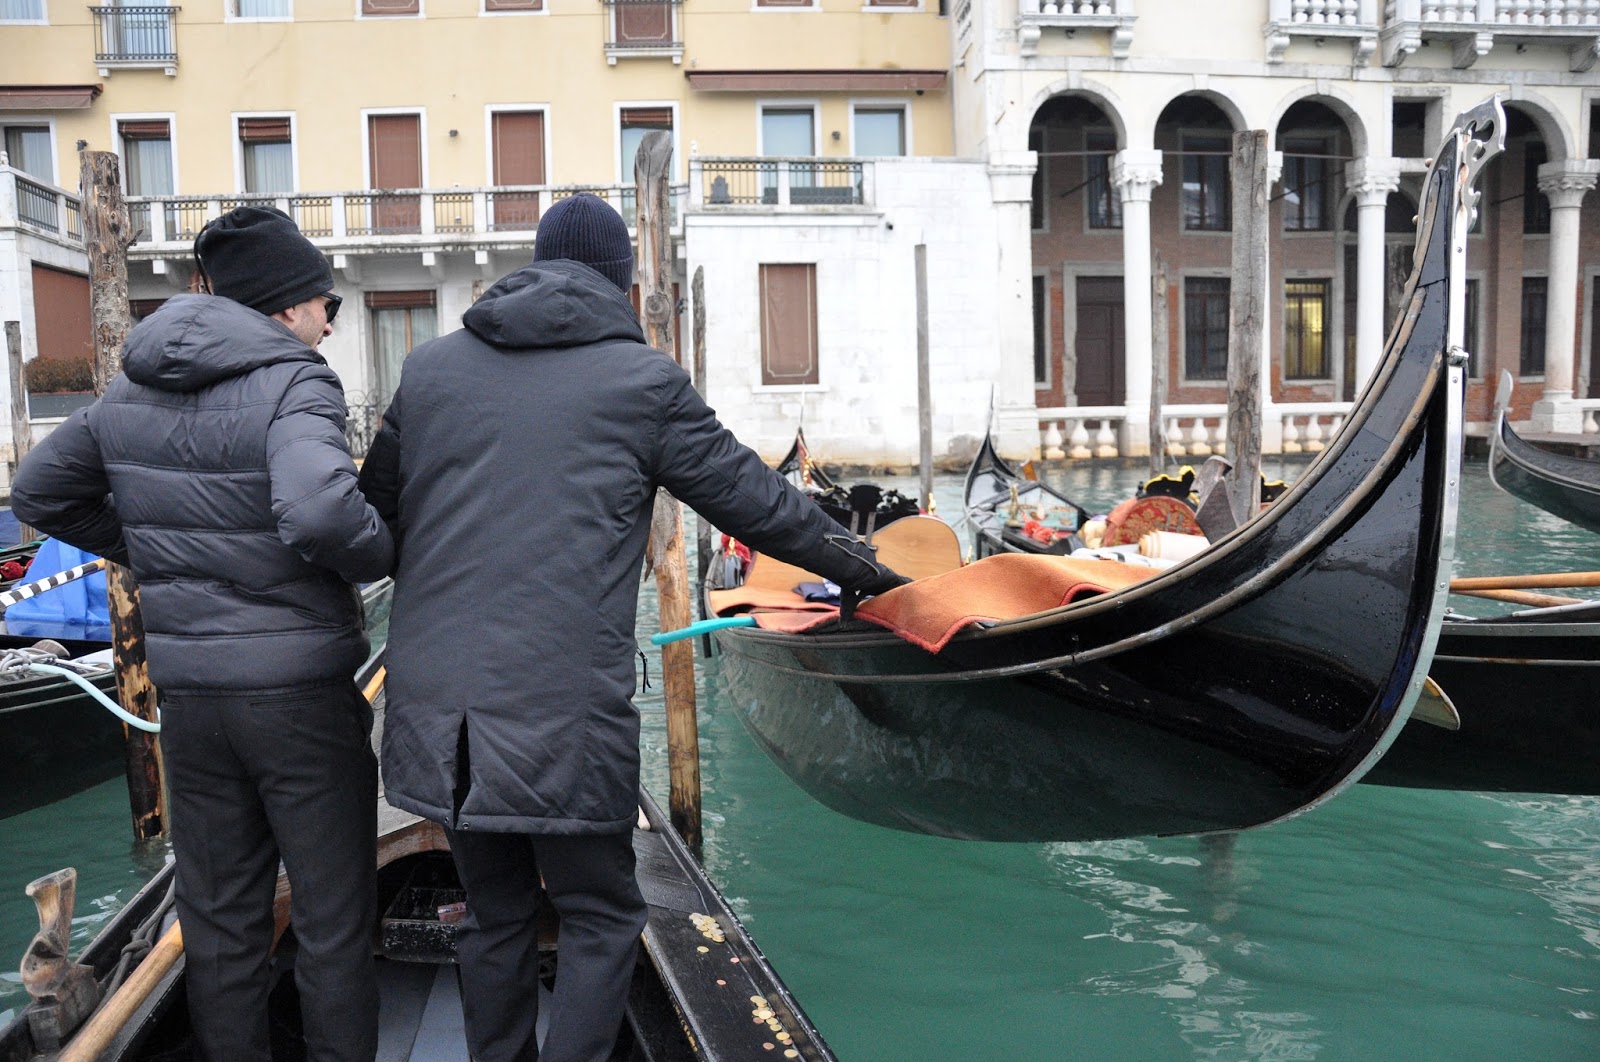 A gondolier gets on his gondola from a traghetto, Venice, Italy